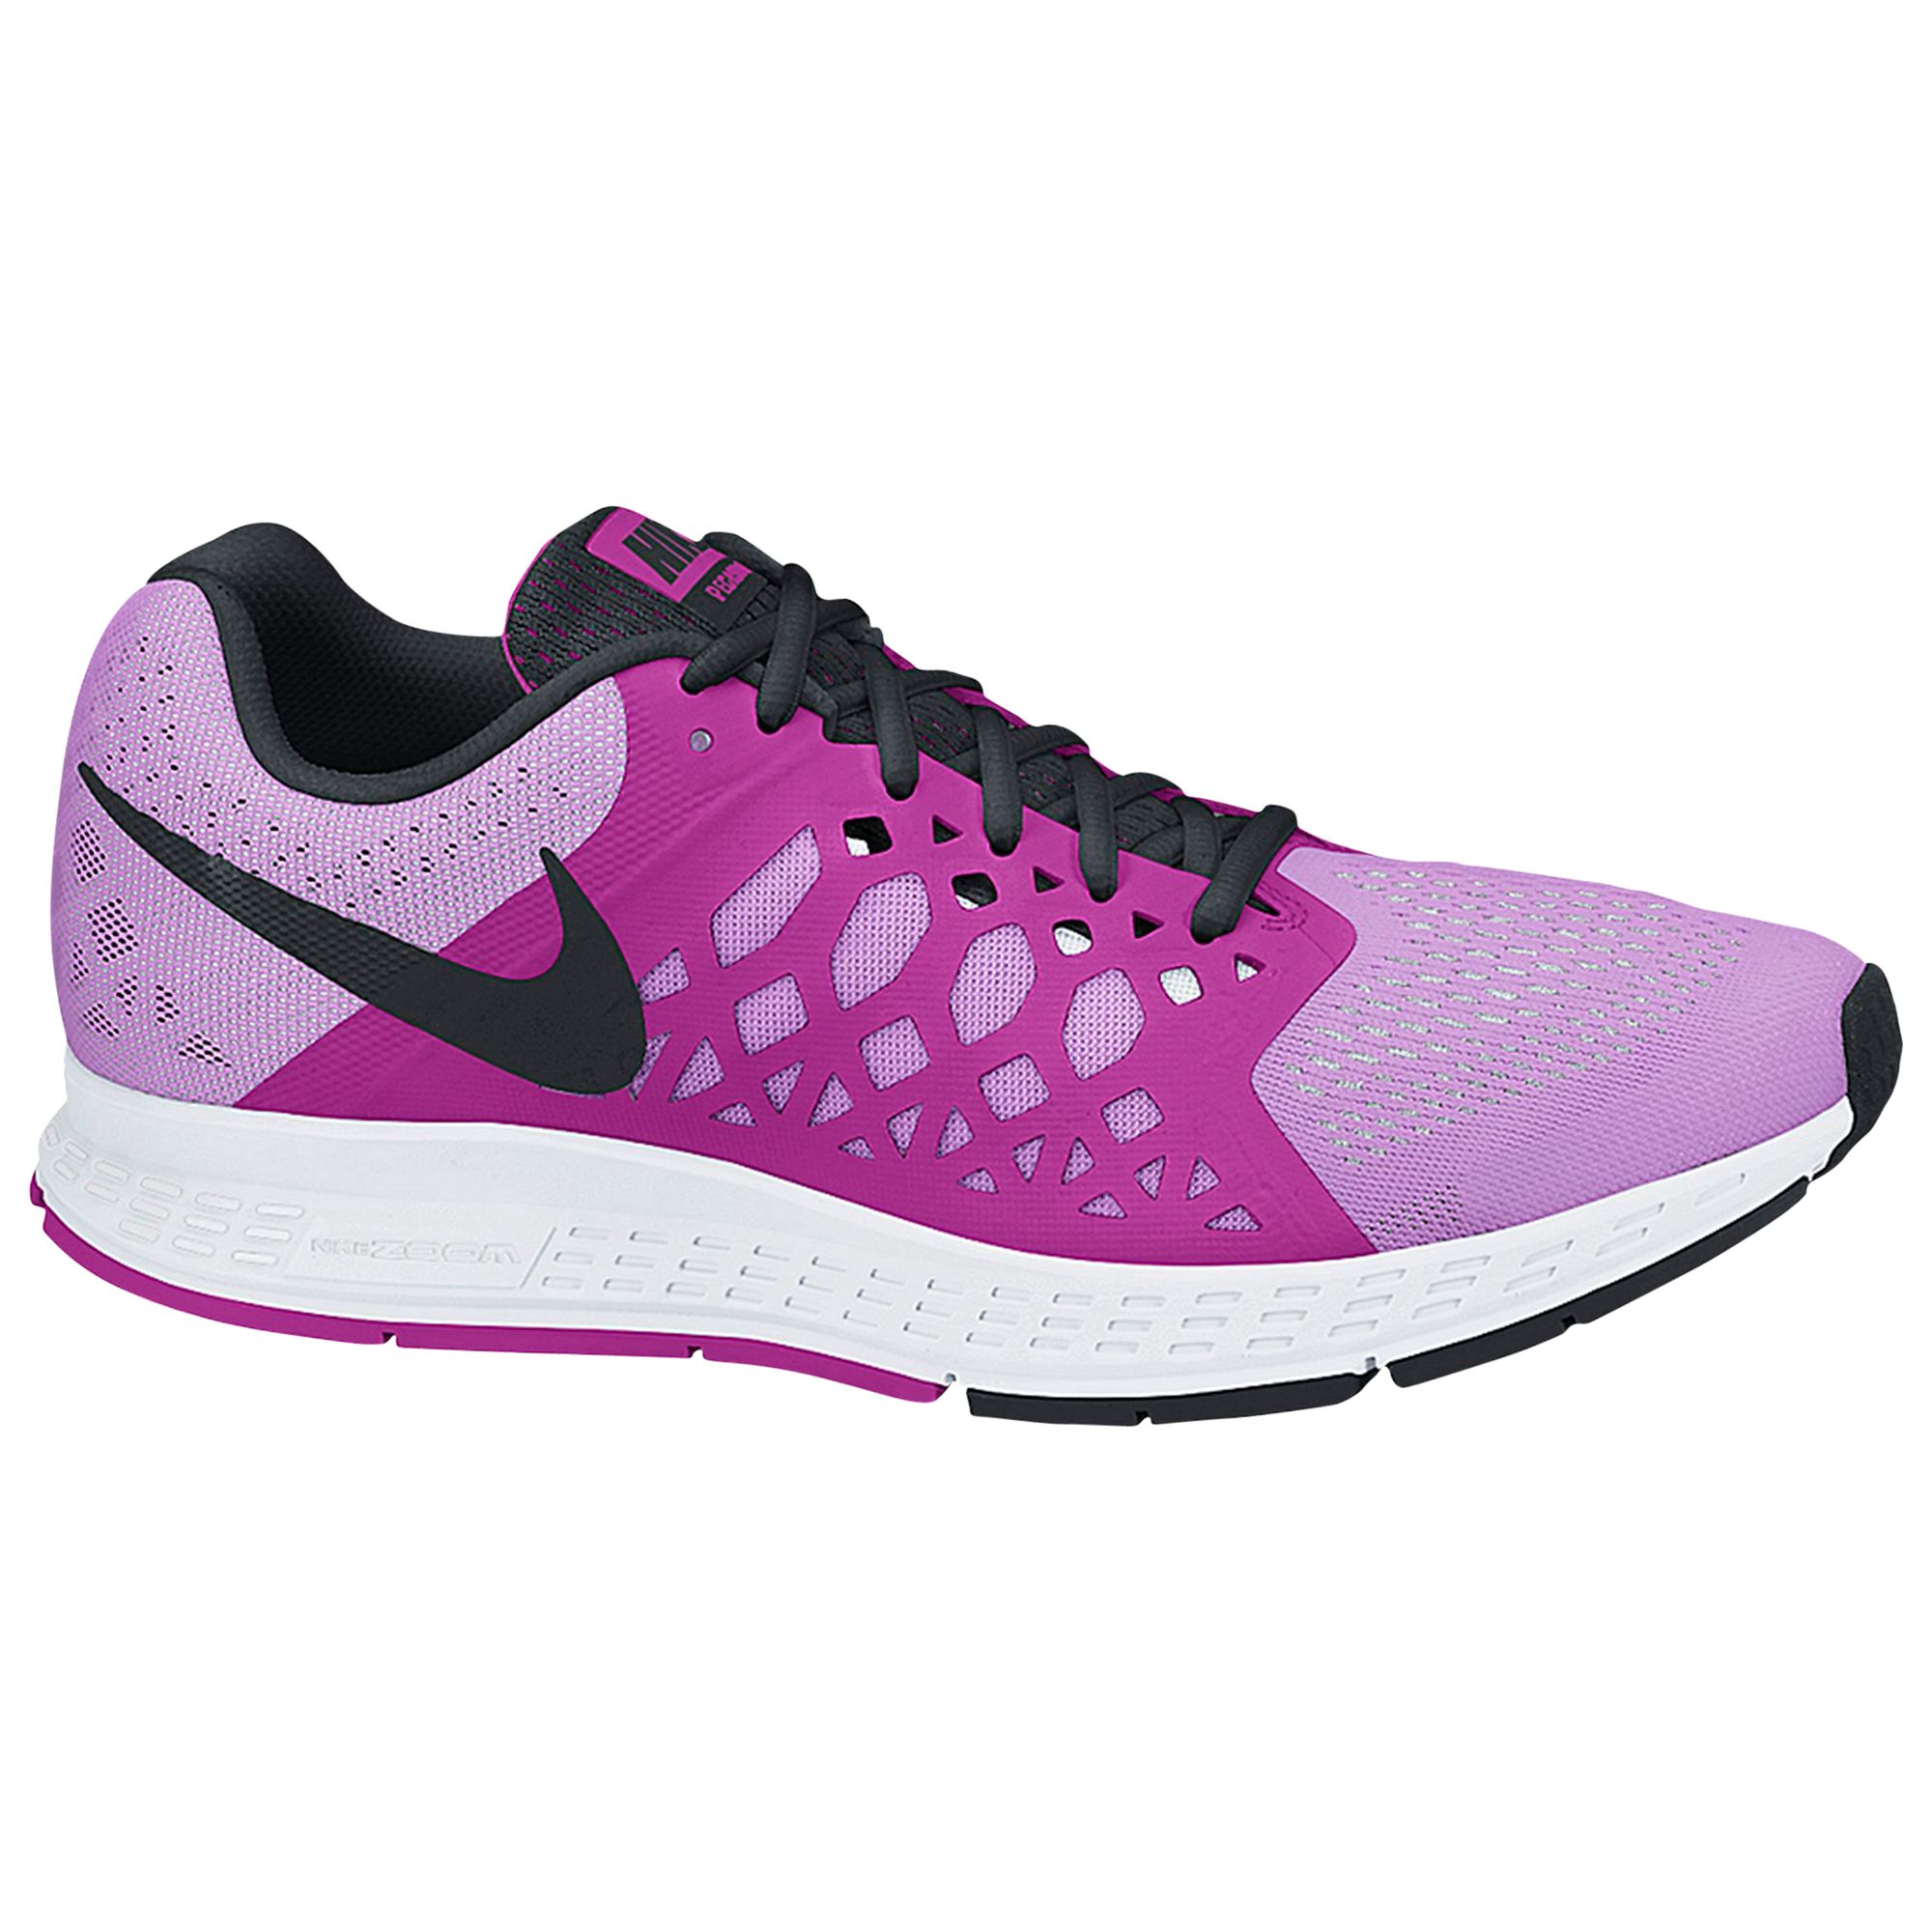 cuero patrón torpe Nike Air Zoom Pegasus 31 Women's Running Shoes, Fuchsia Glow/Black